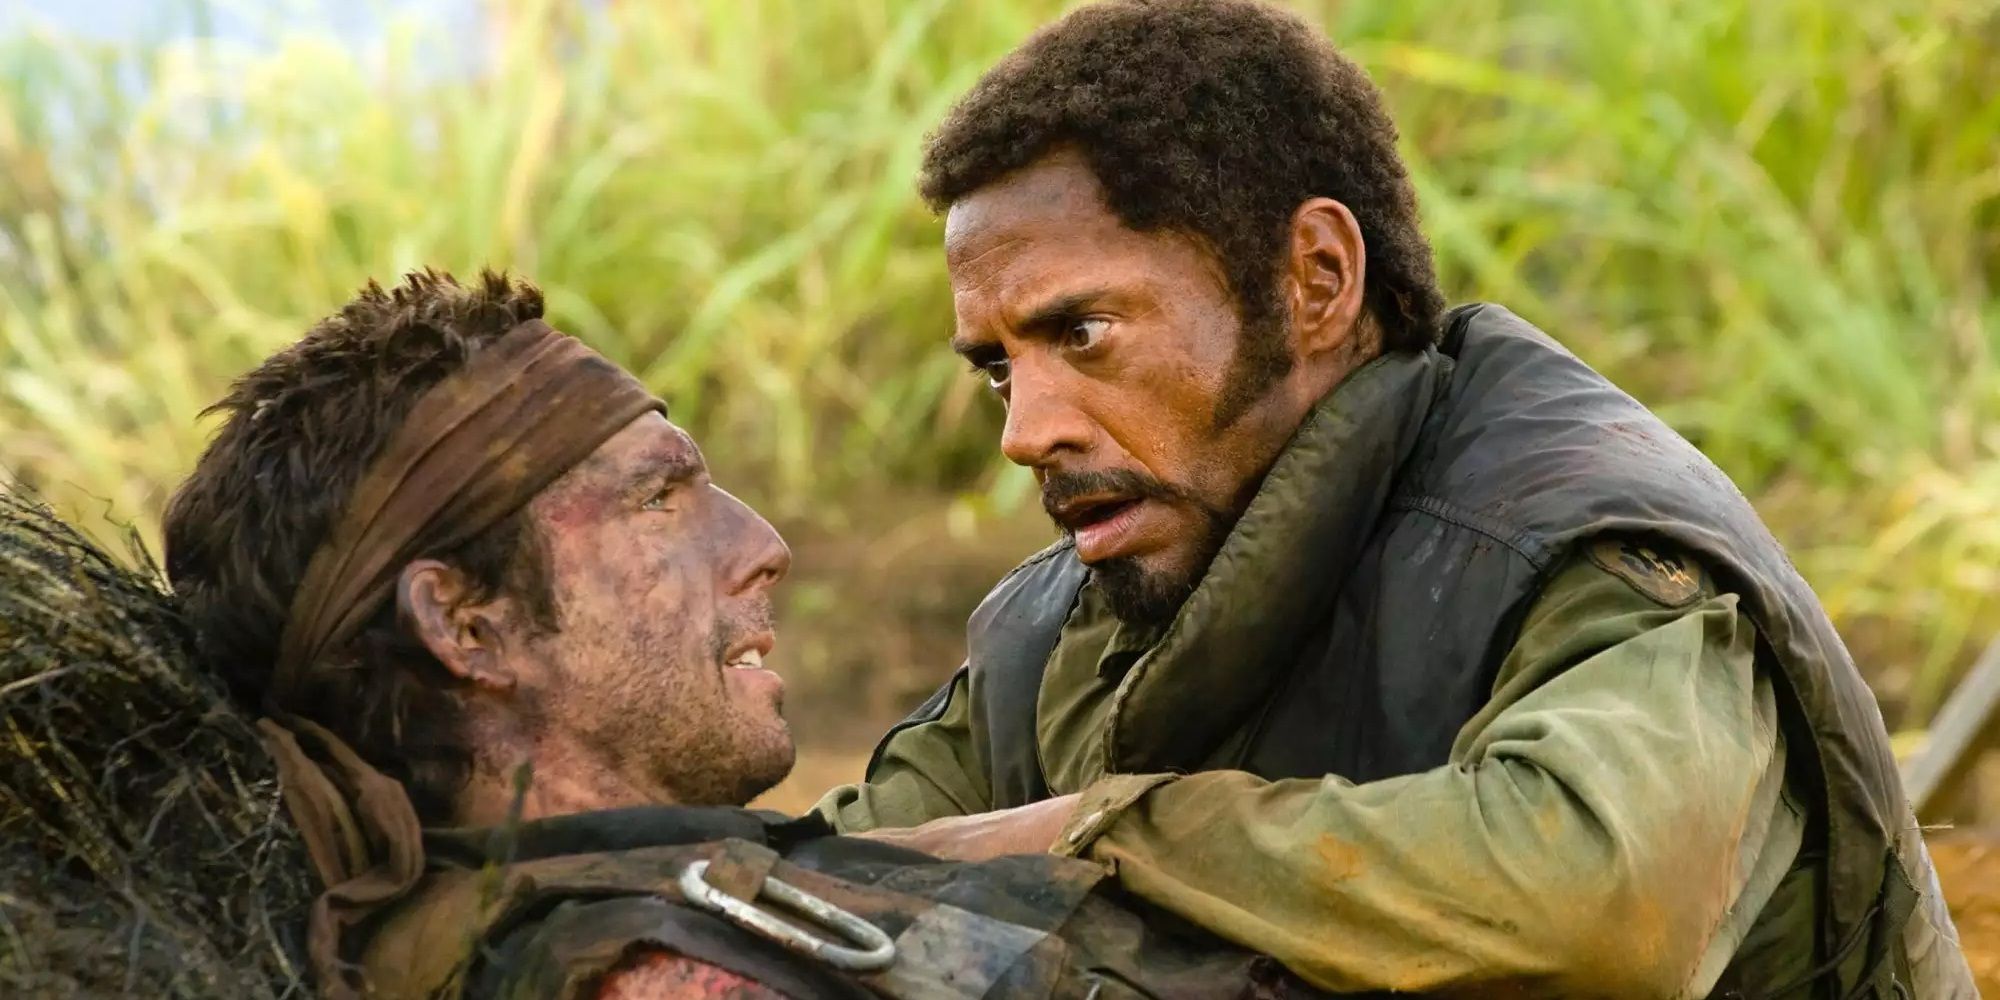 Ben Stiller and Robert Downey Jr in the jungle in Tropic Thunder